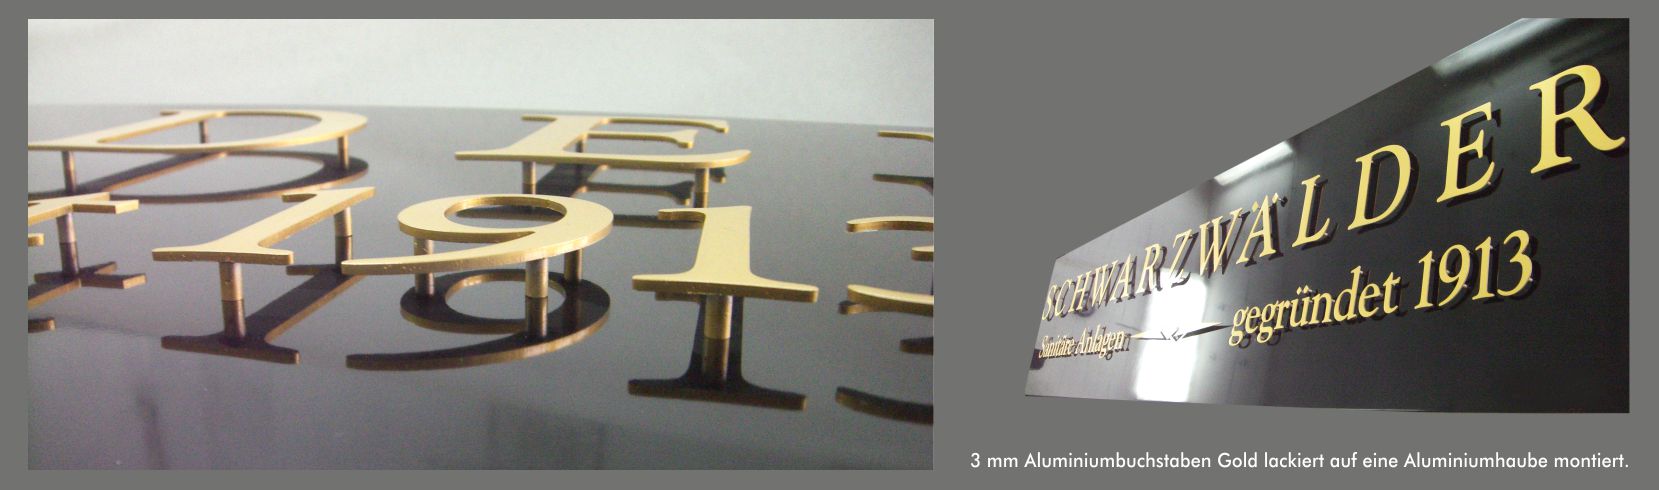 3_mm_Aluminiumbuchstaben auf Aluminiumhaube